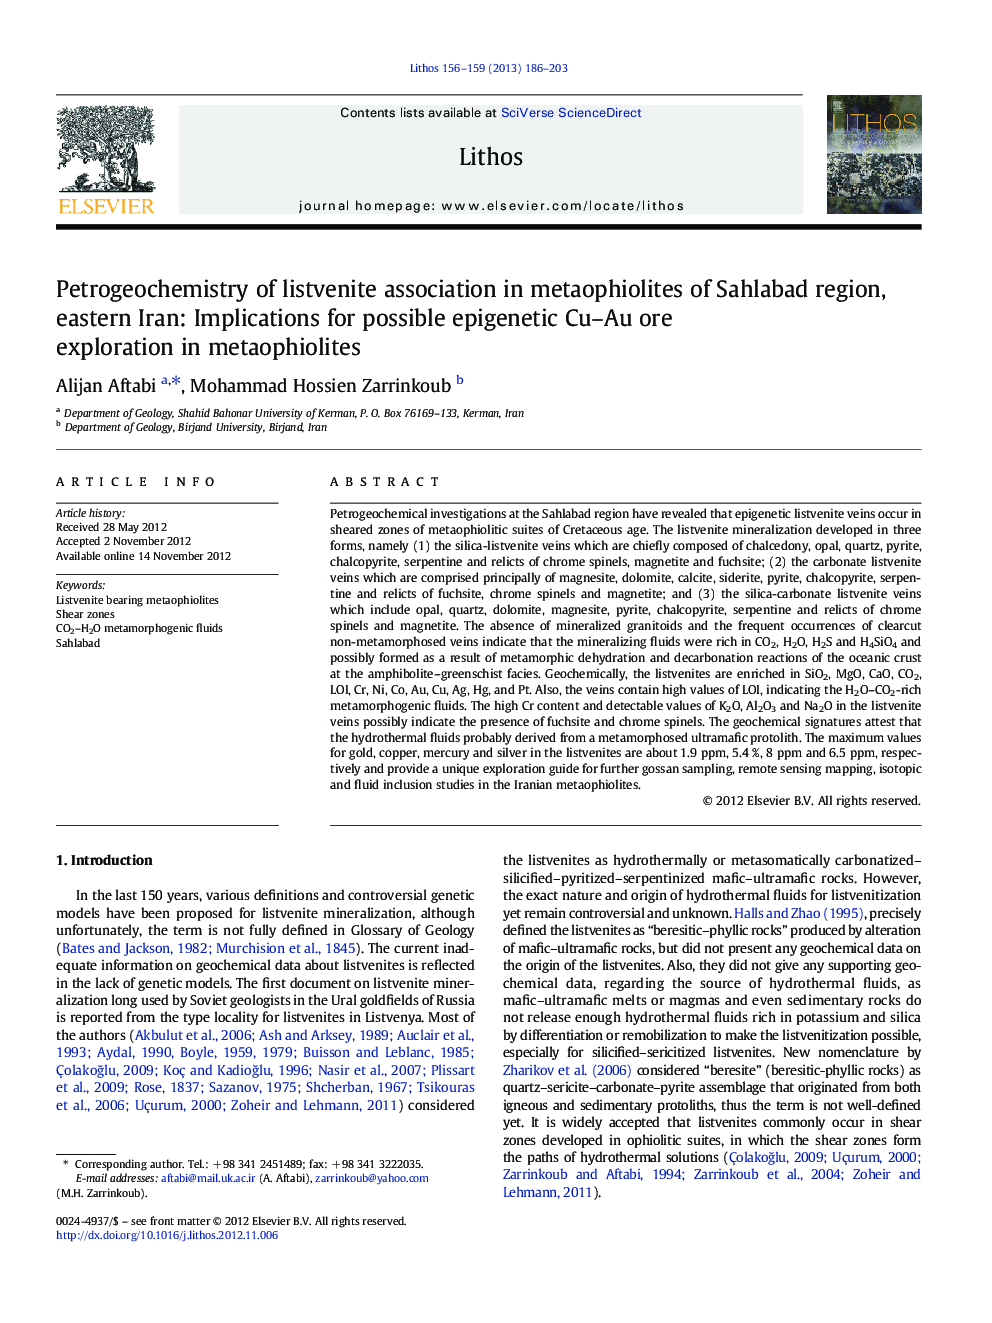 Petrogeochemistry of listvenite association in metaophiolites of Sahlabad region, eastern Iran: Implications for possible epigenetic Cu–Au ore exploration in metaophiolites